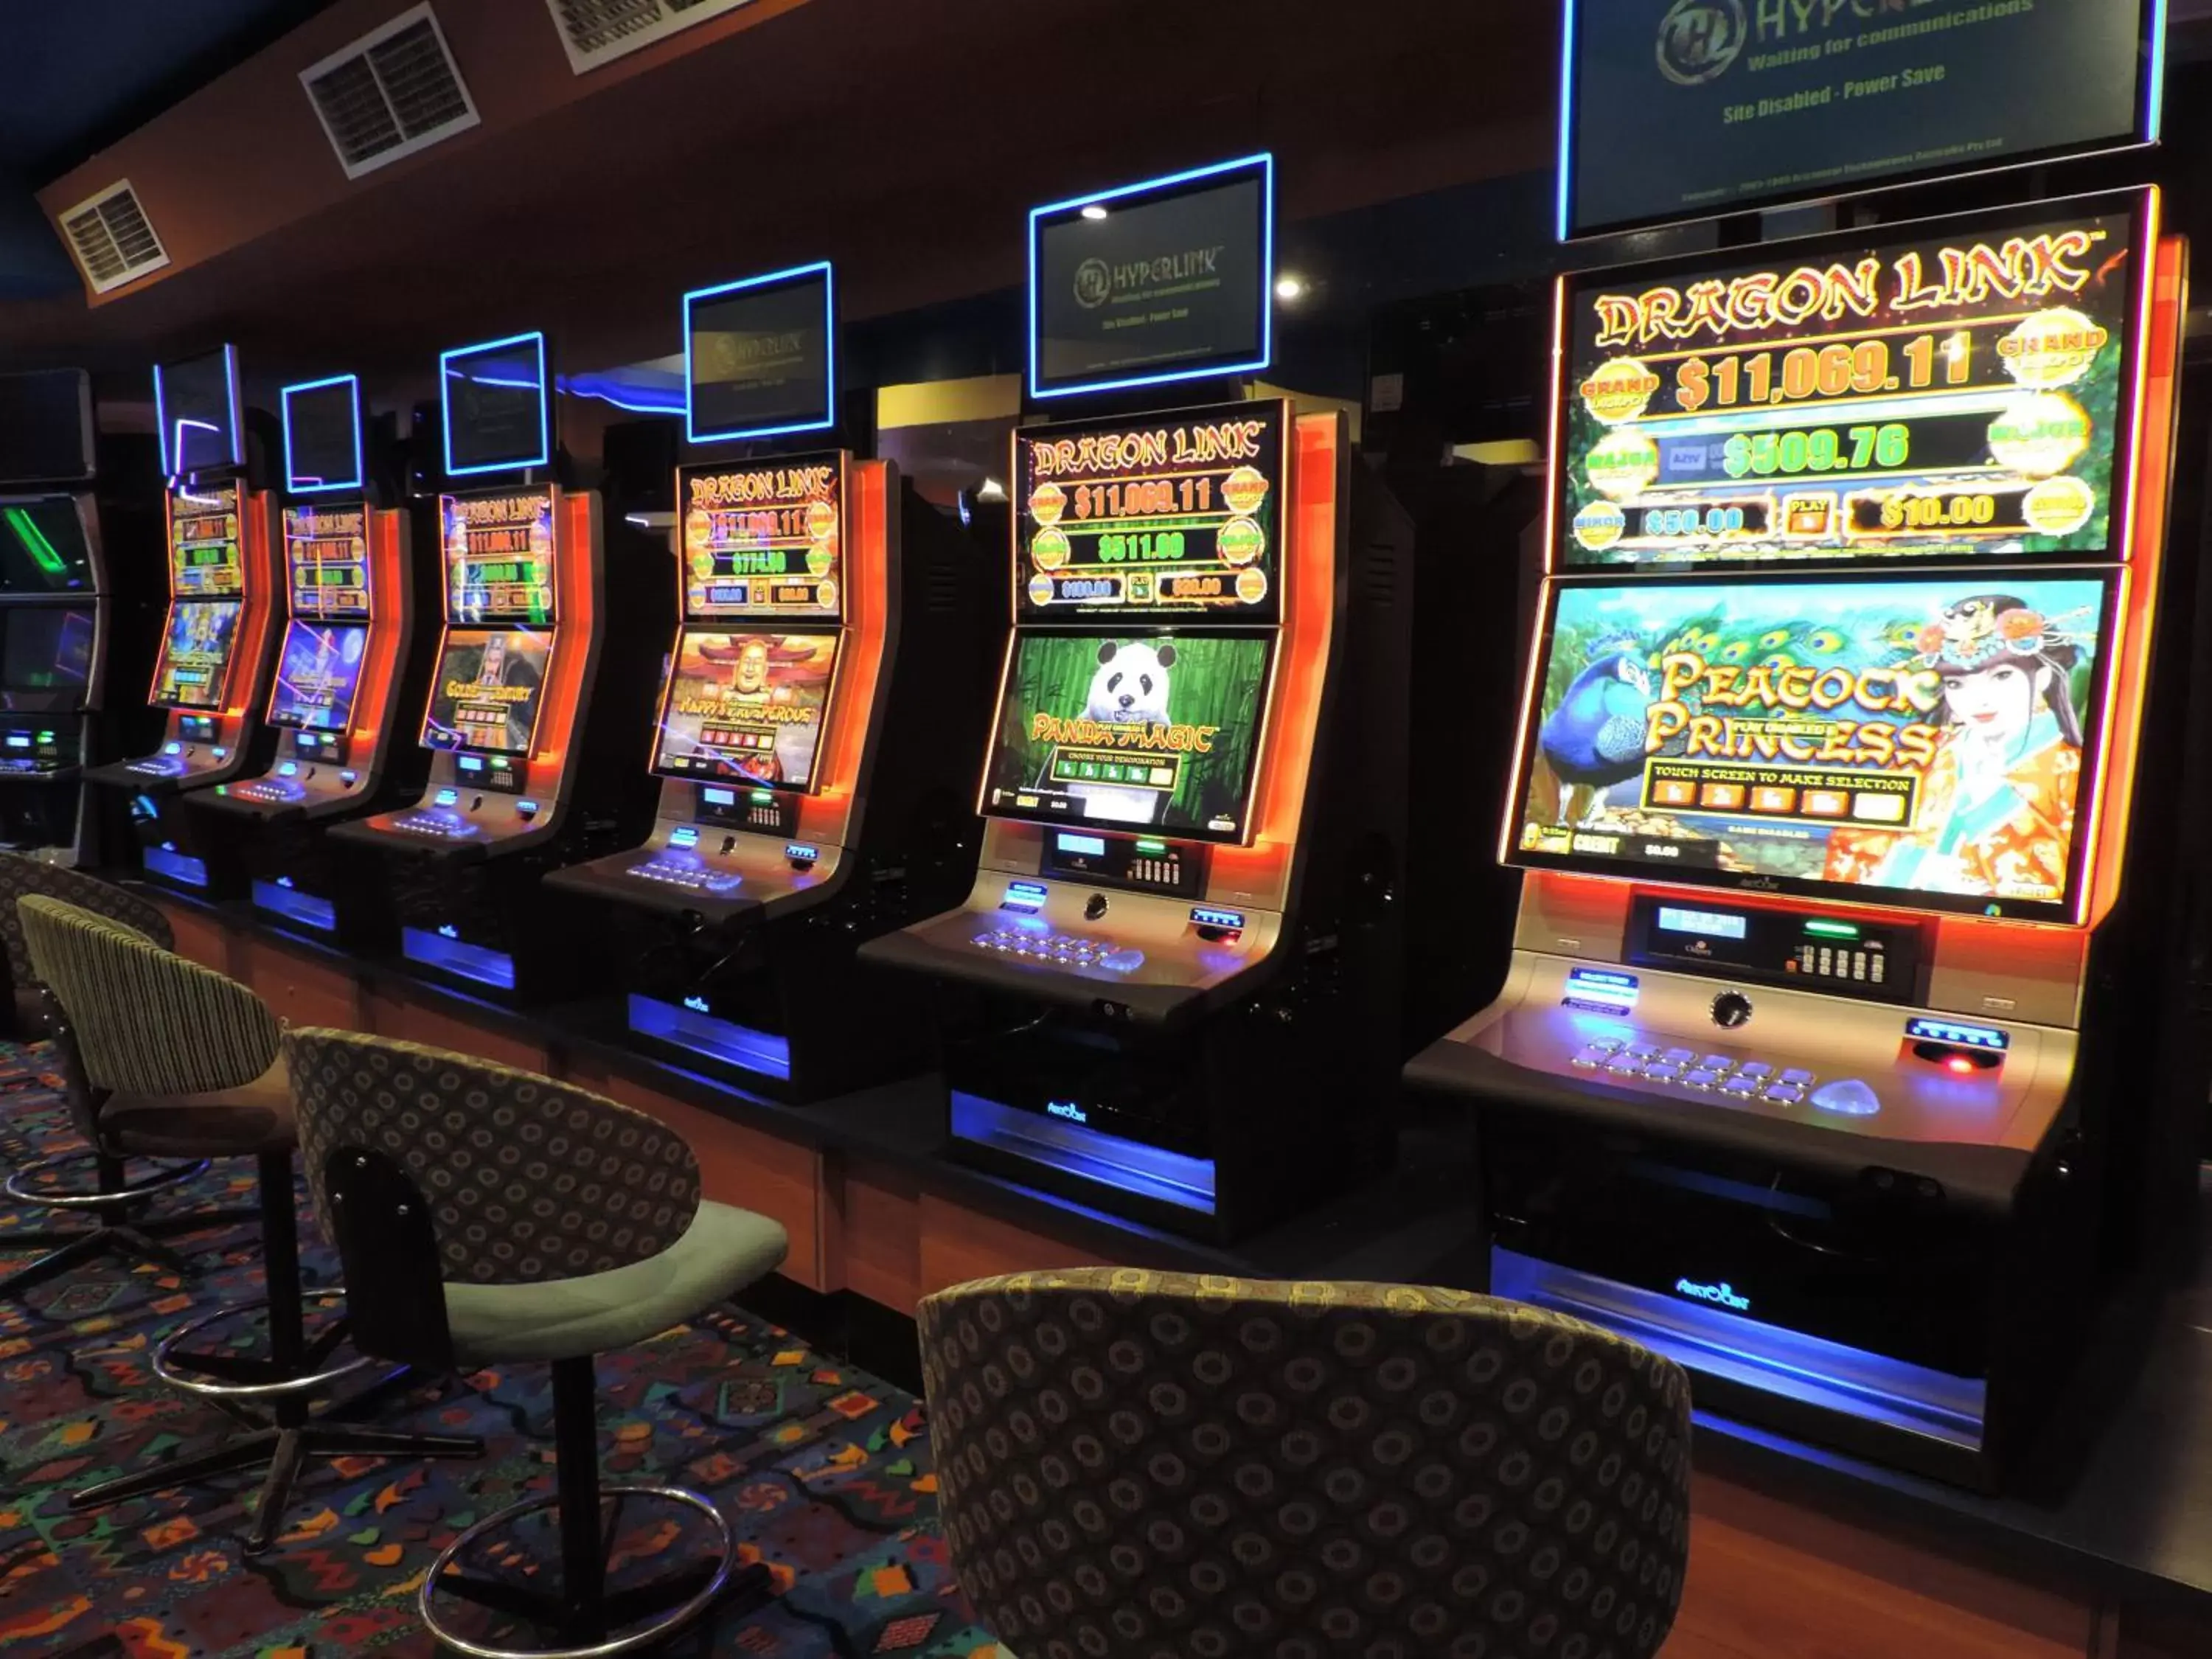 Casino in O'Shea's Royal Hotel